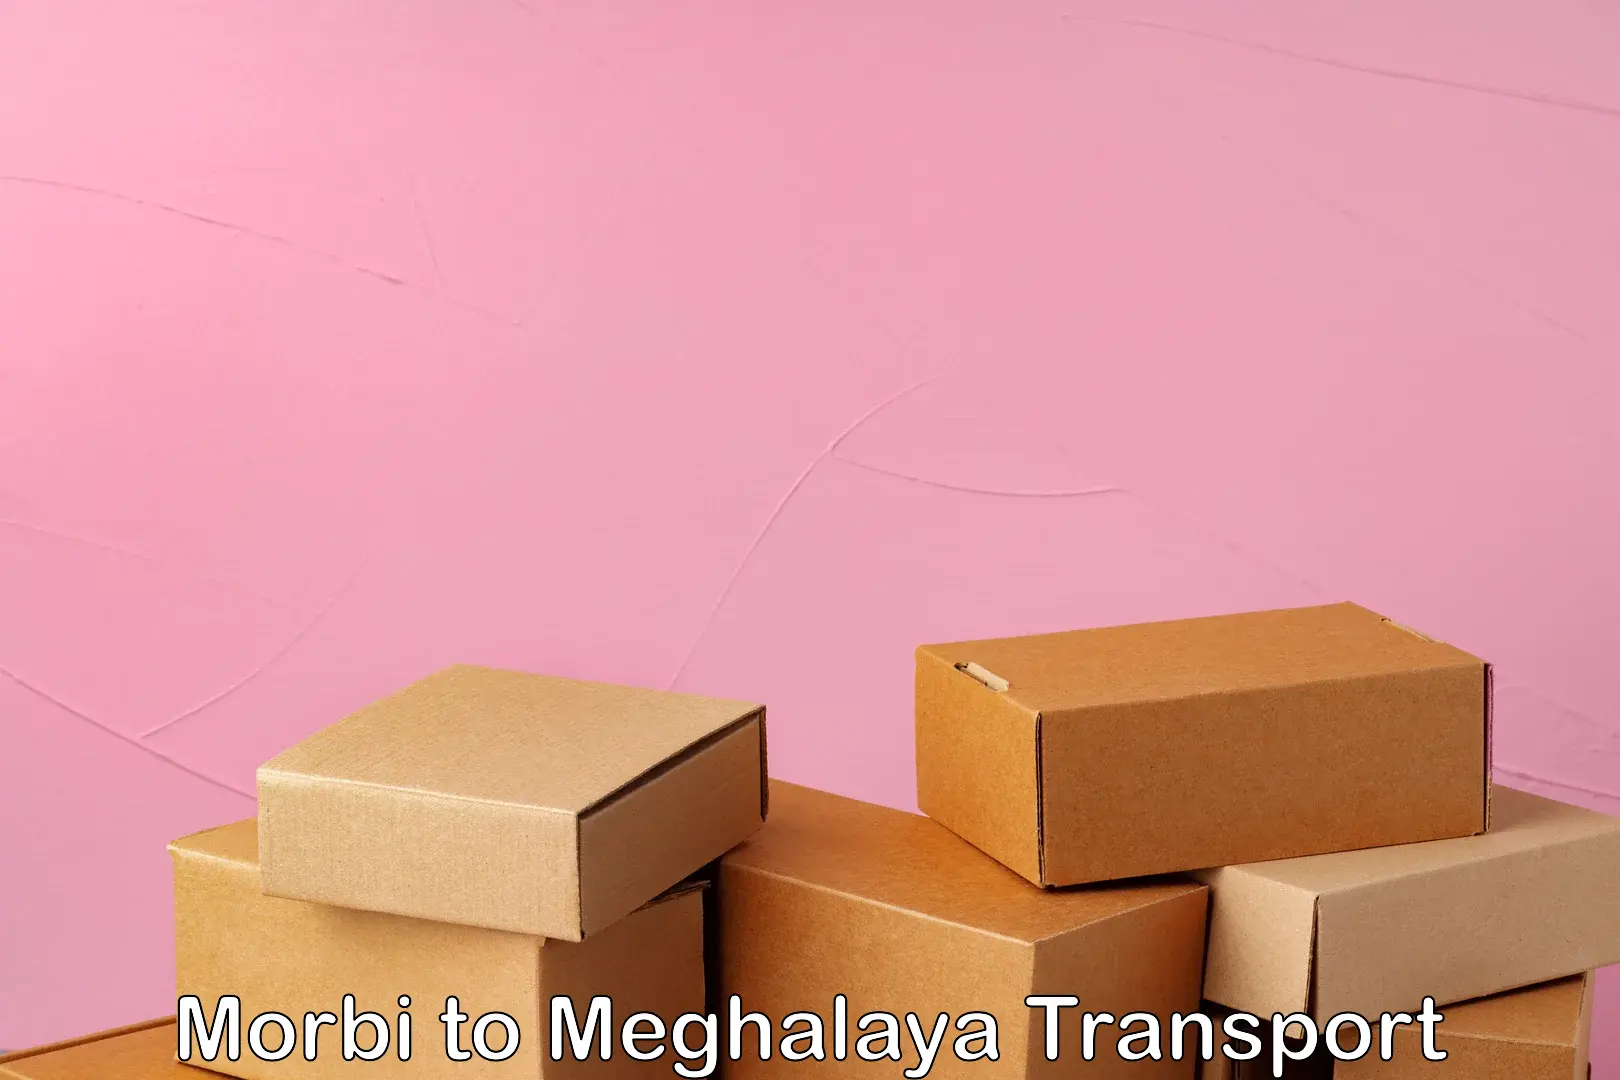 Delivery service Morbi to Meghalaya